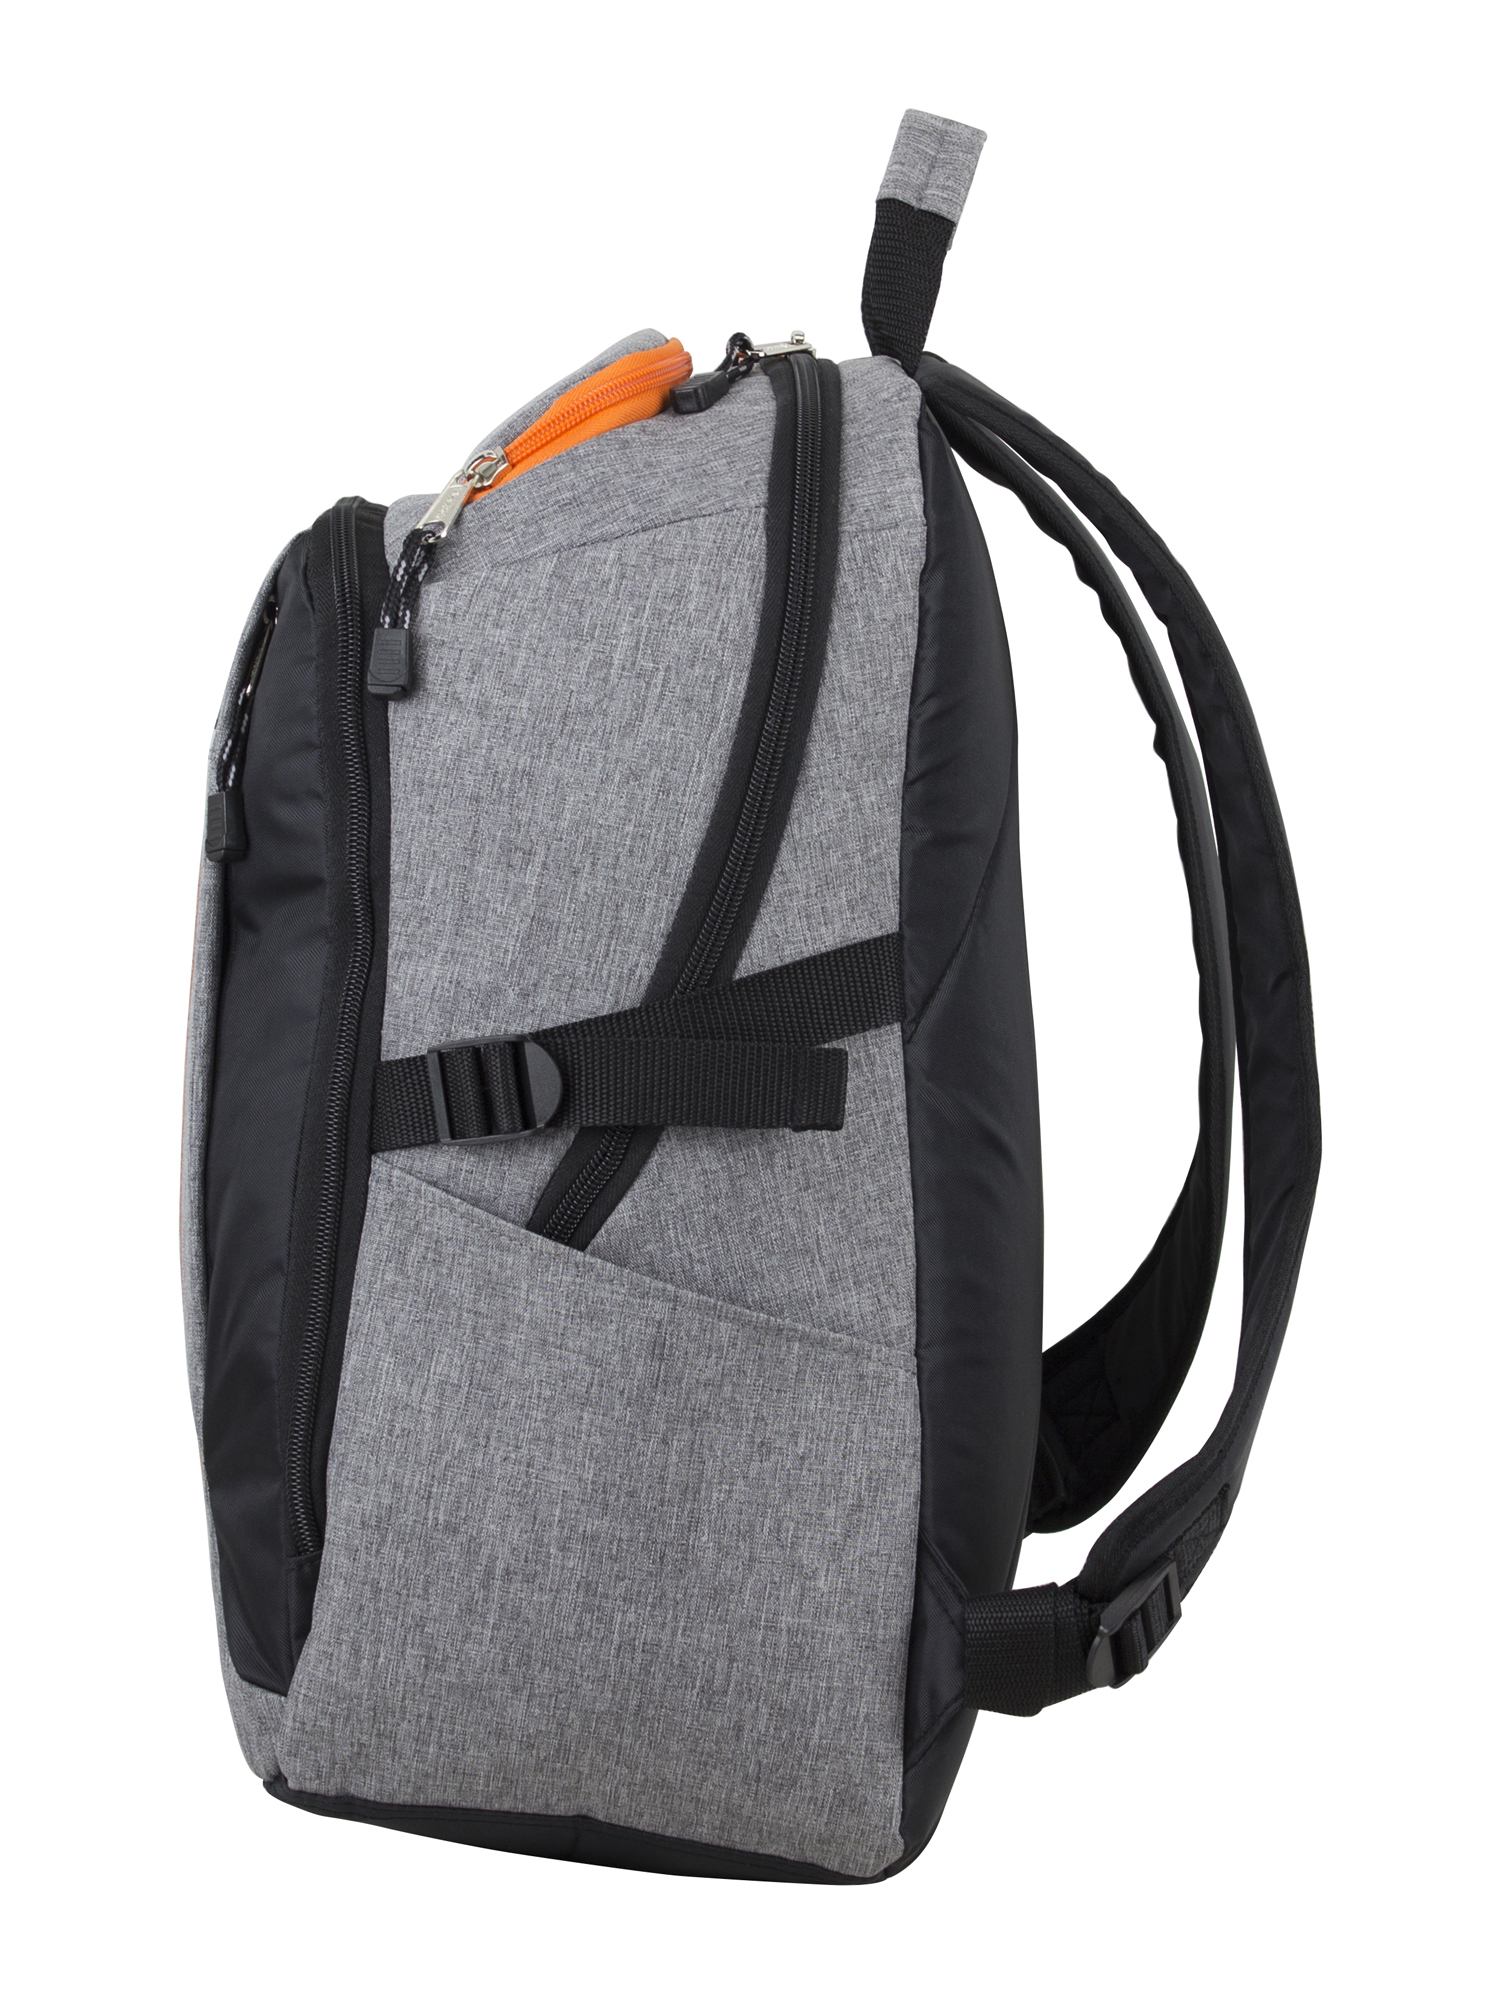 Eastsport Multi-Purpose Pro Defender Mid Grey Backpack with Adjustable Straps - image 5 of 6